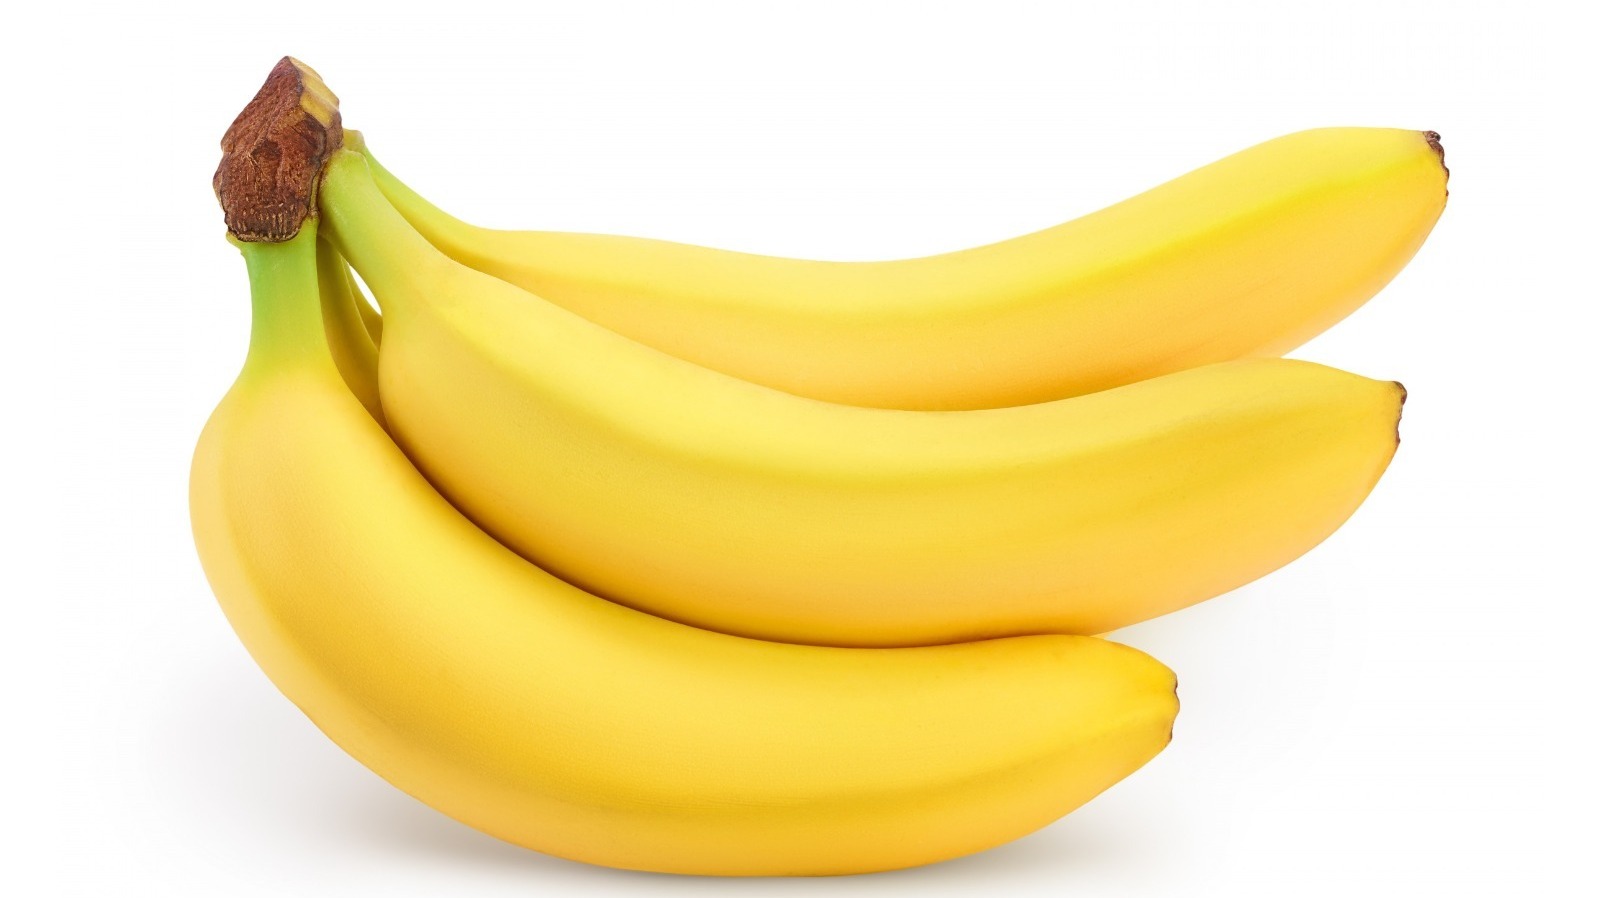 Banana Loca® Kitchen Gadget - Core & Fill A Banana While Still In Its Peel